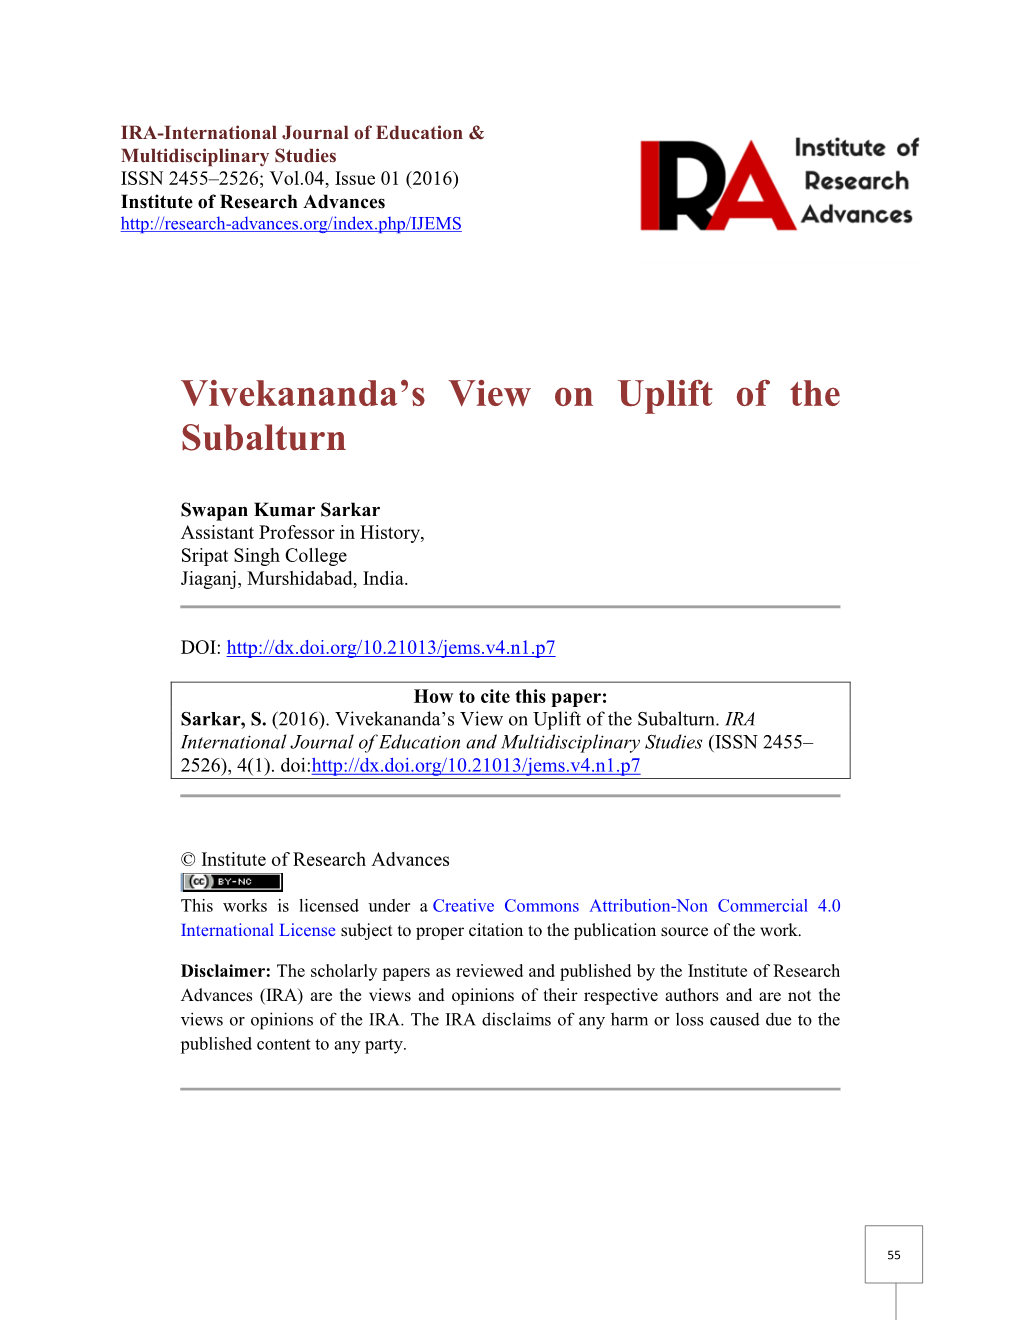 Vivekananda's View on Uplift of the Subalturn